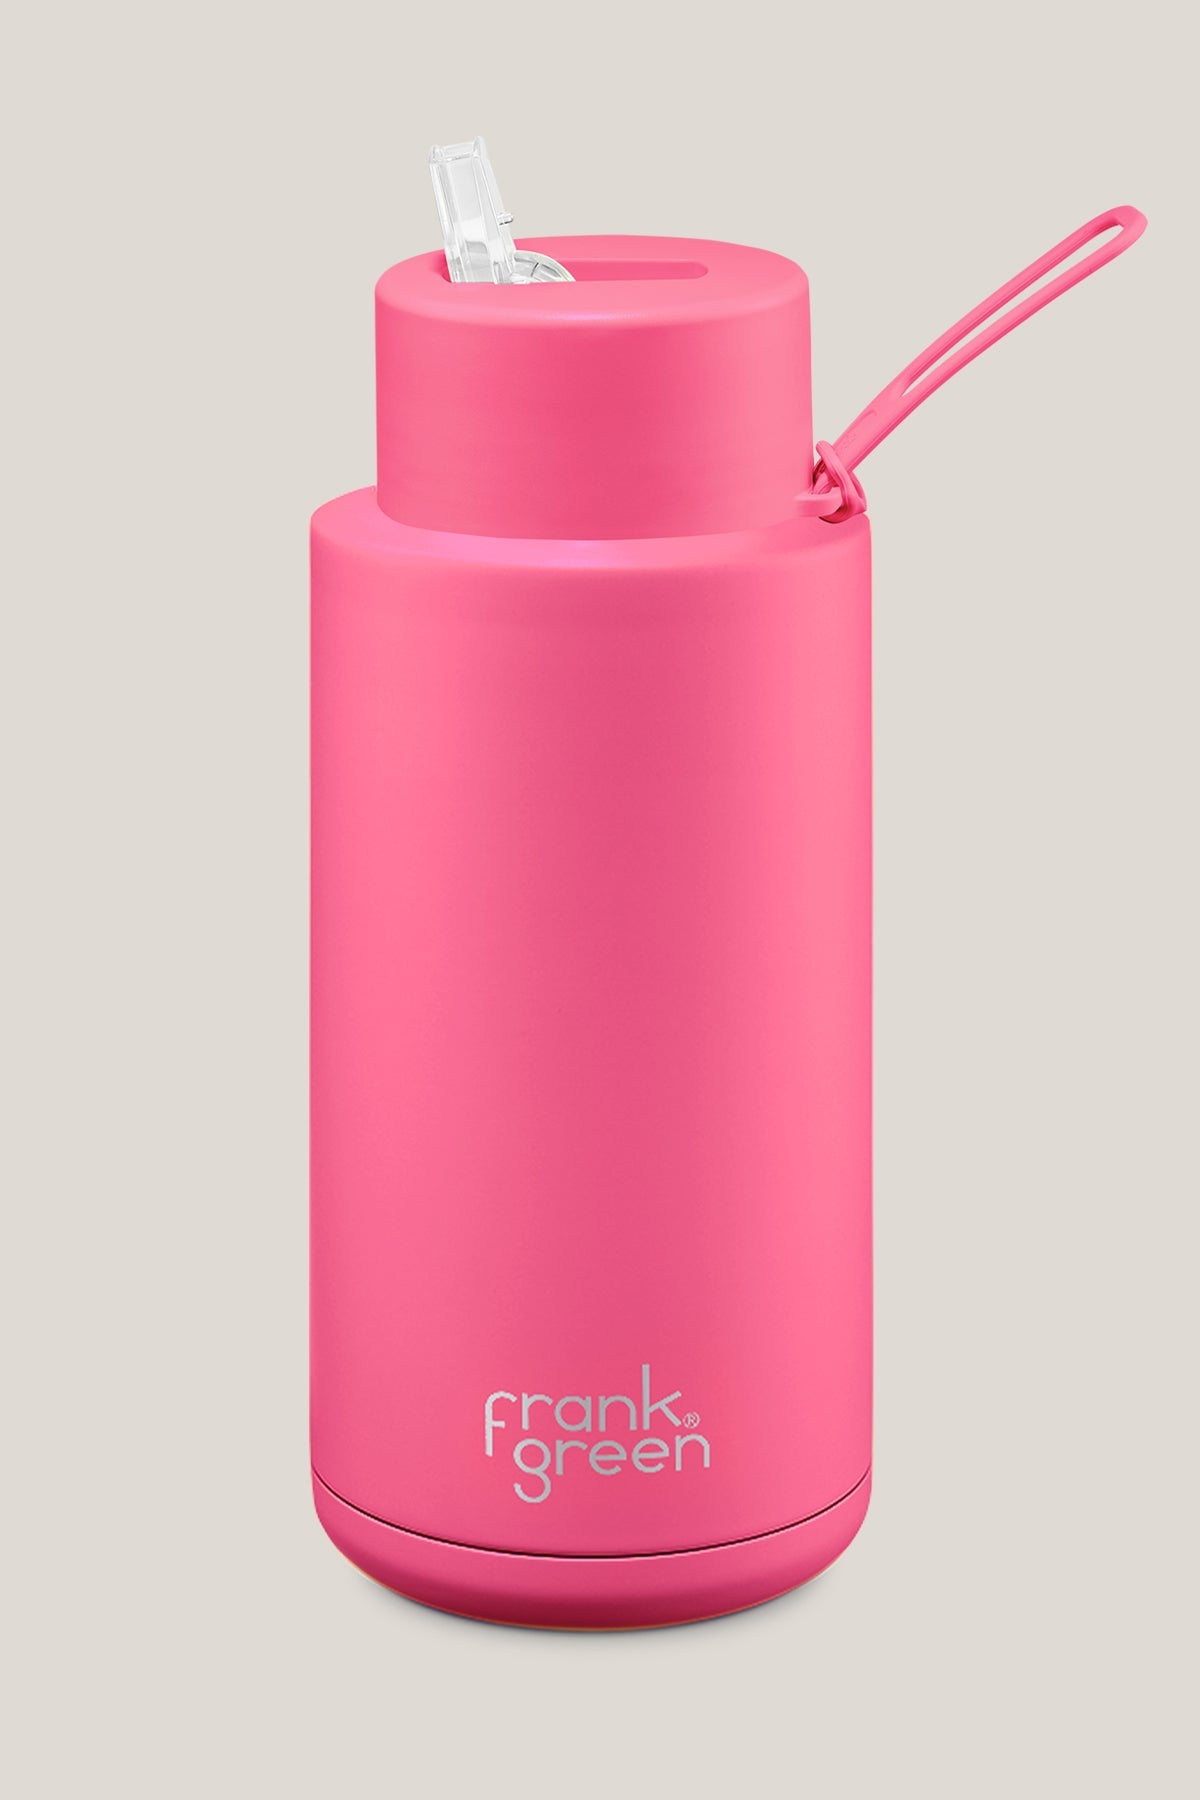 Frank Green 34oz Reusable Bottle Soft Stone – Universal Store